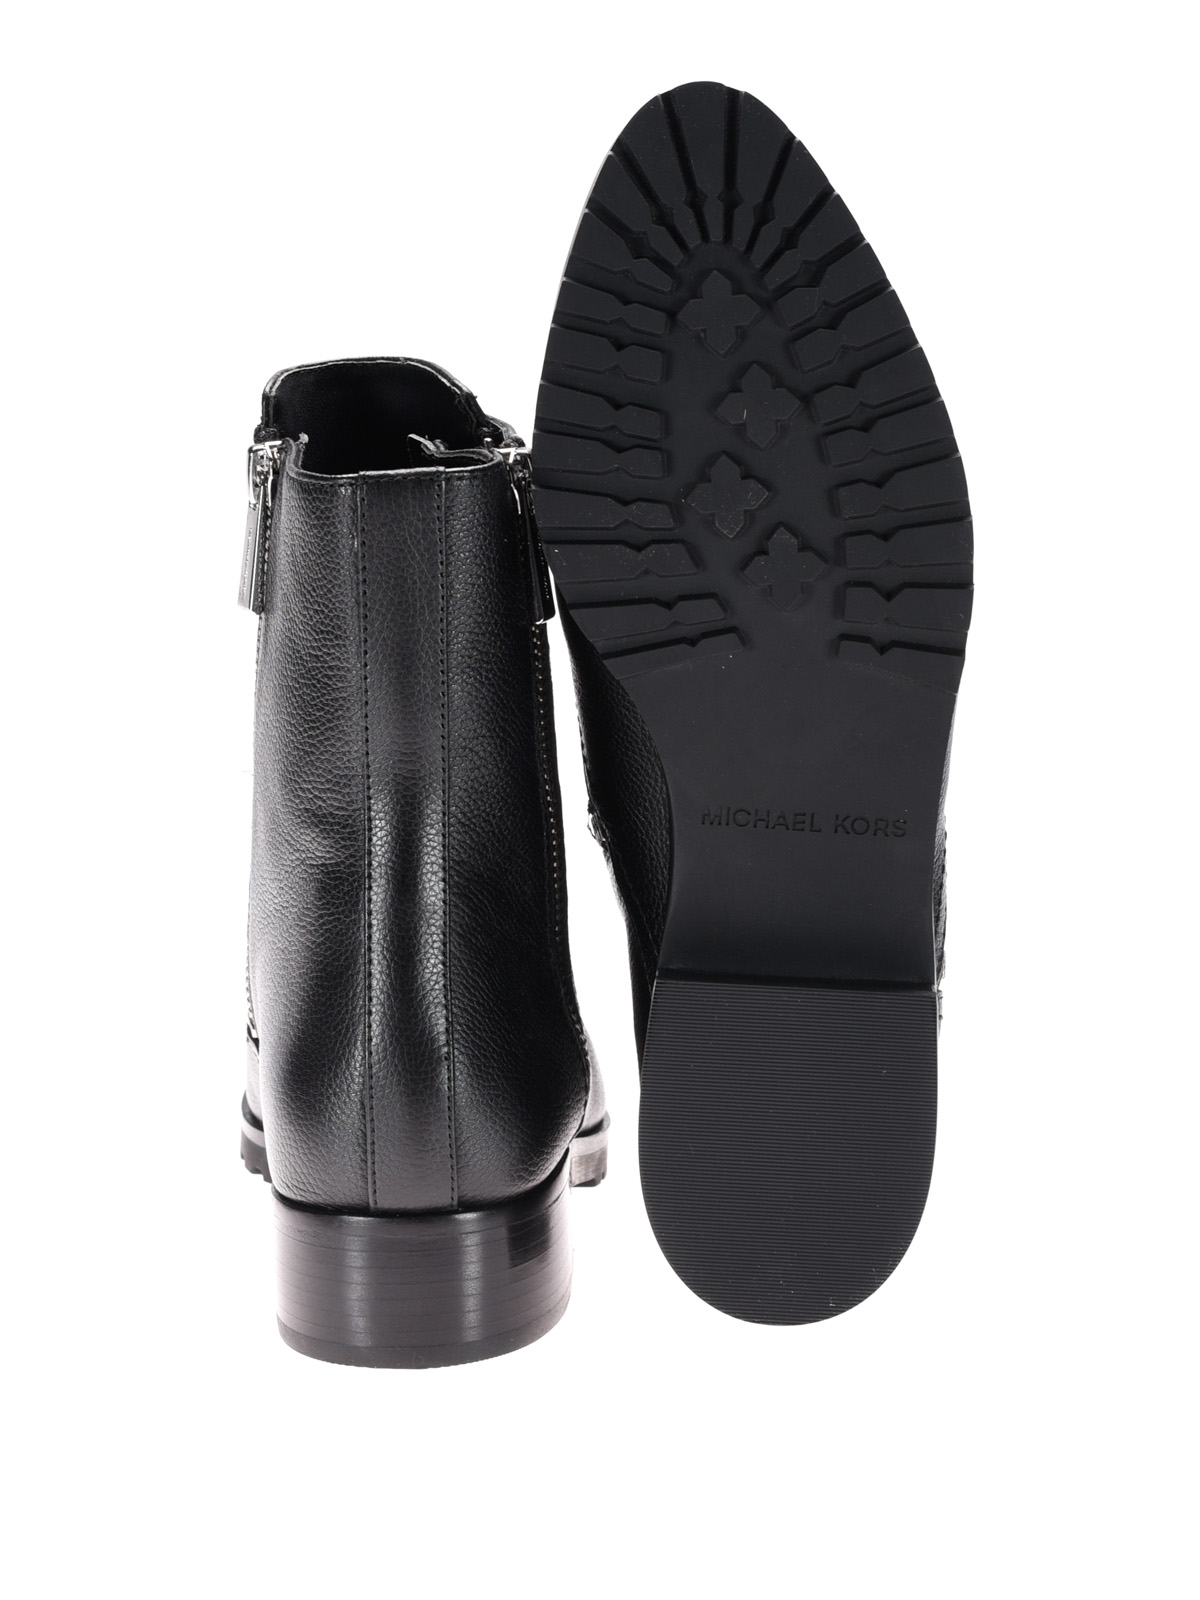 michael kors black leather booties